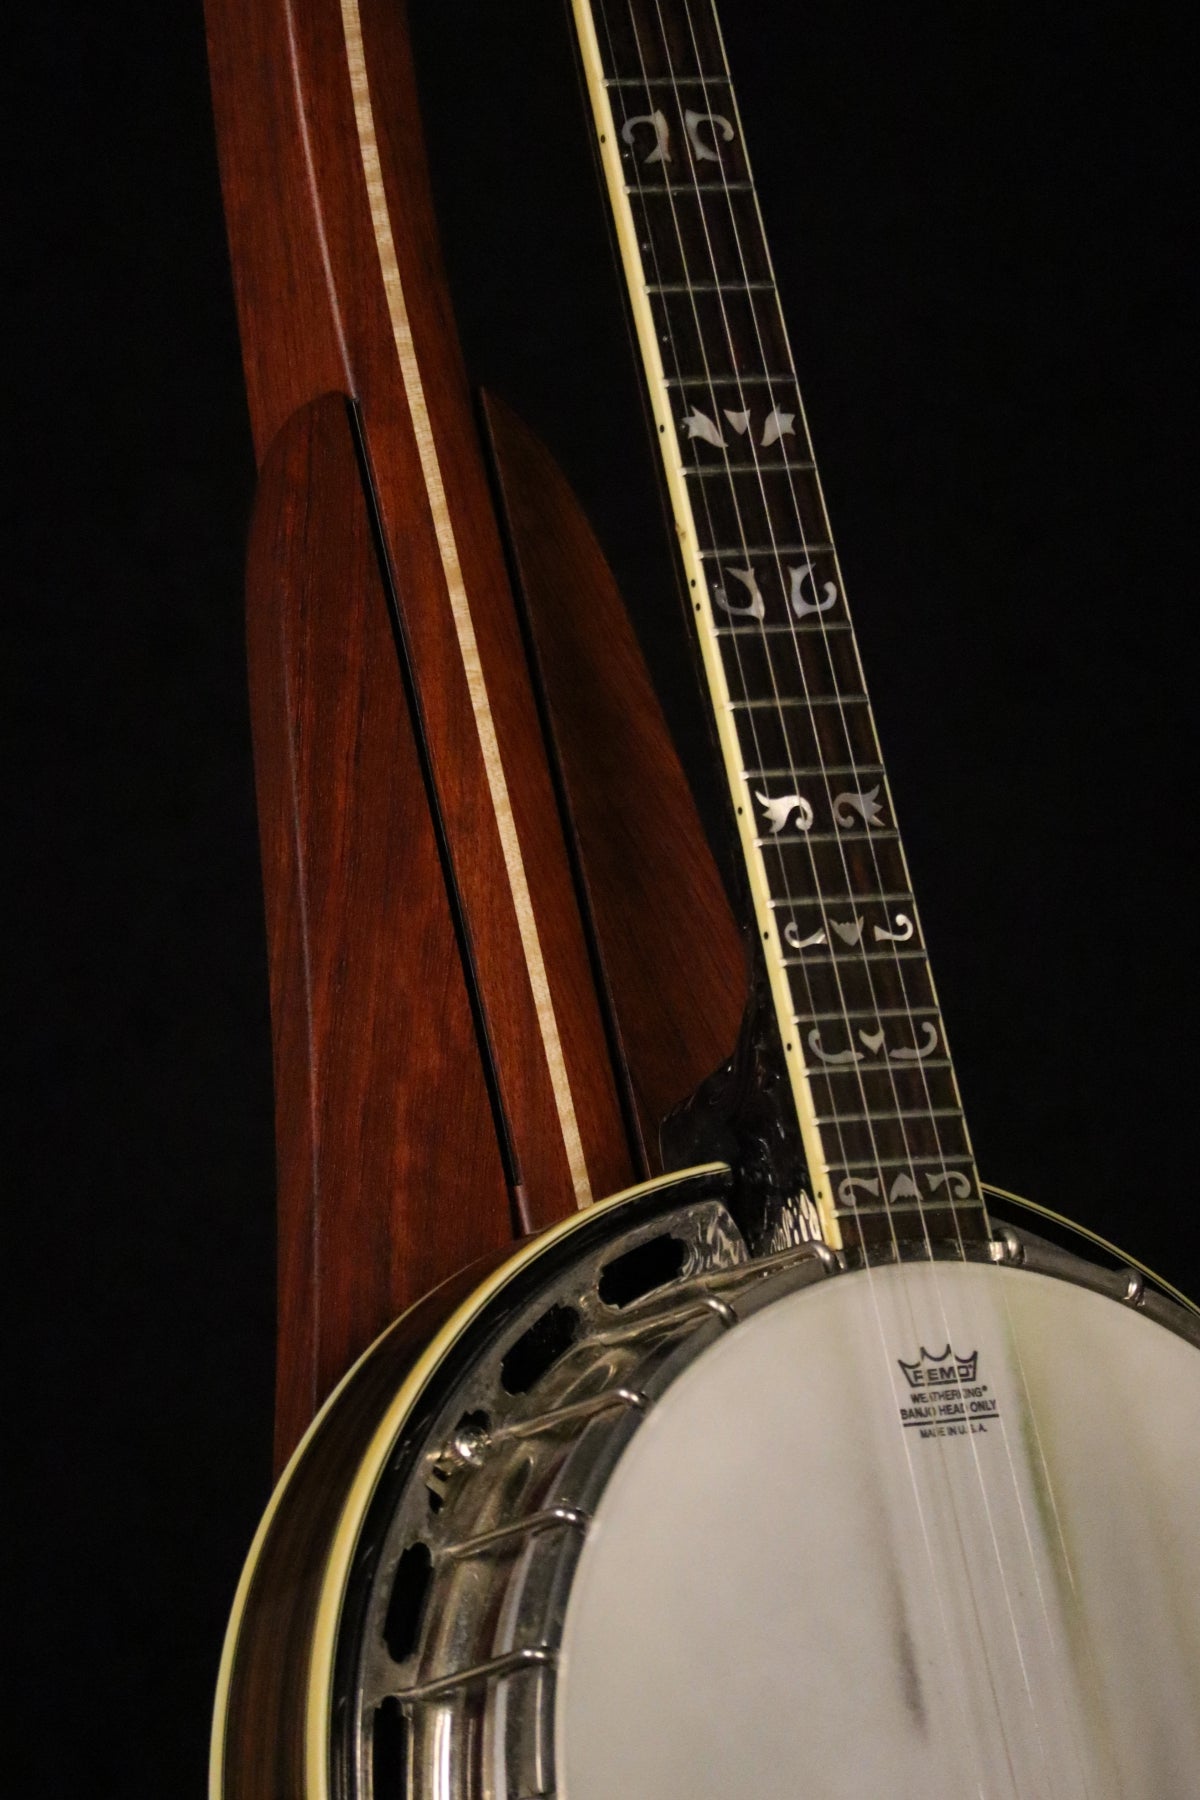 Folding bubinga rosewood and curly maple wood banjo floor stand closeup front image with Alvarez banjo